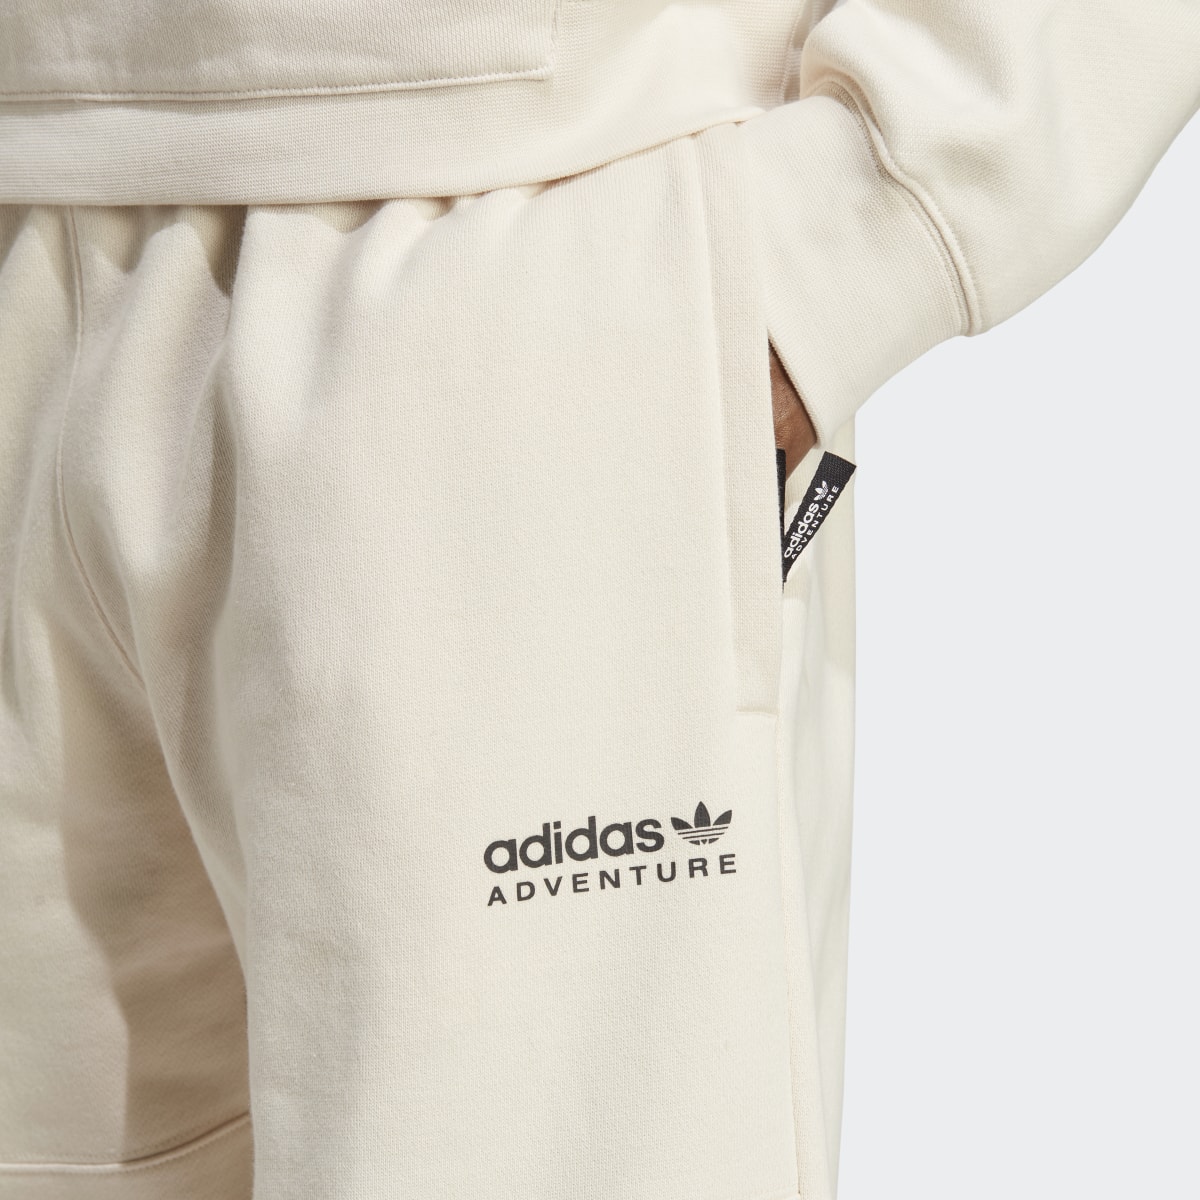 Adidas Adventure Sweat Pants. 5